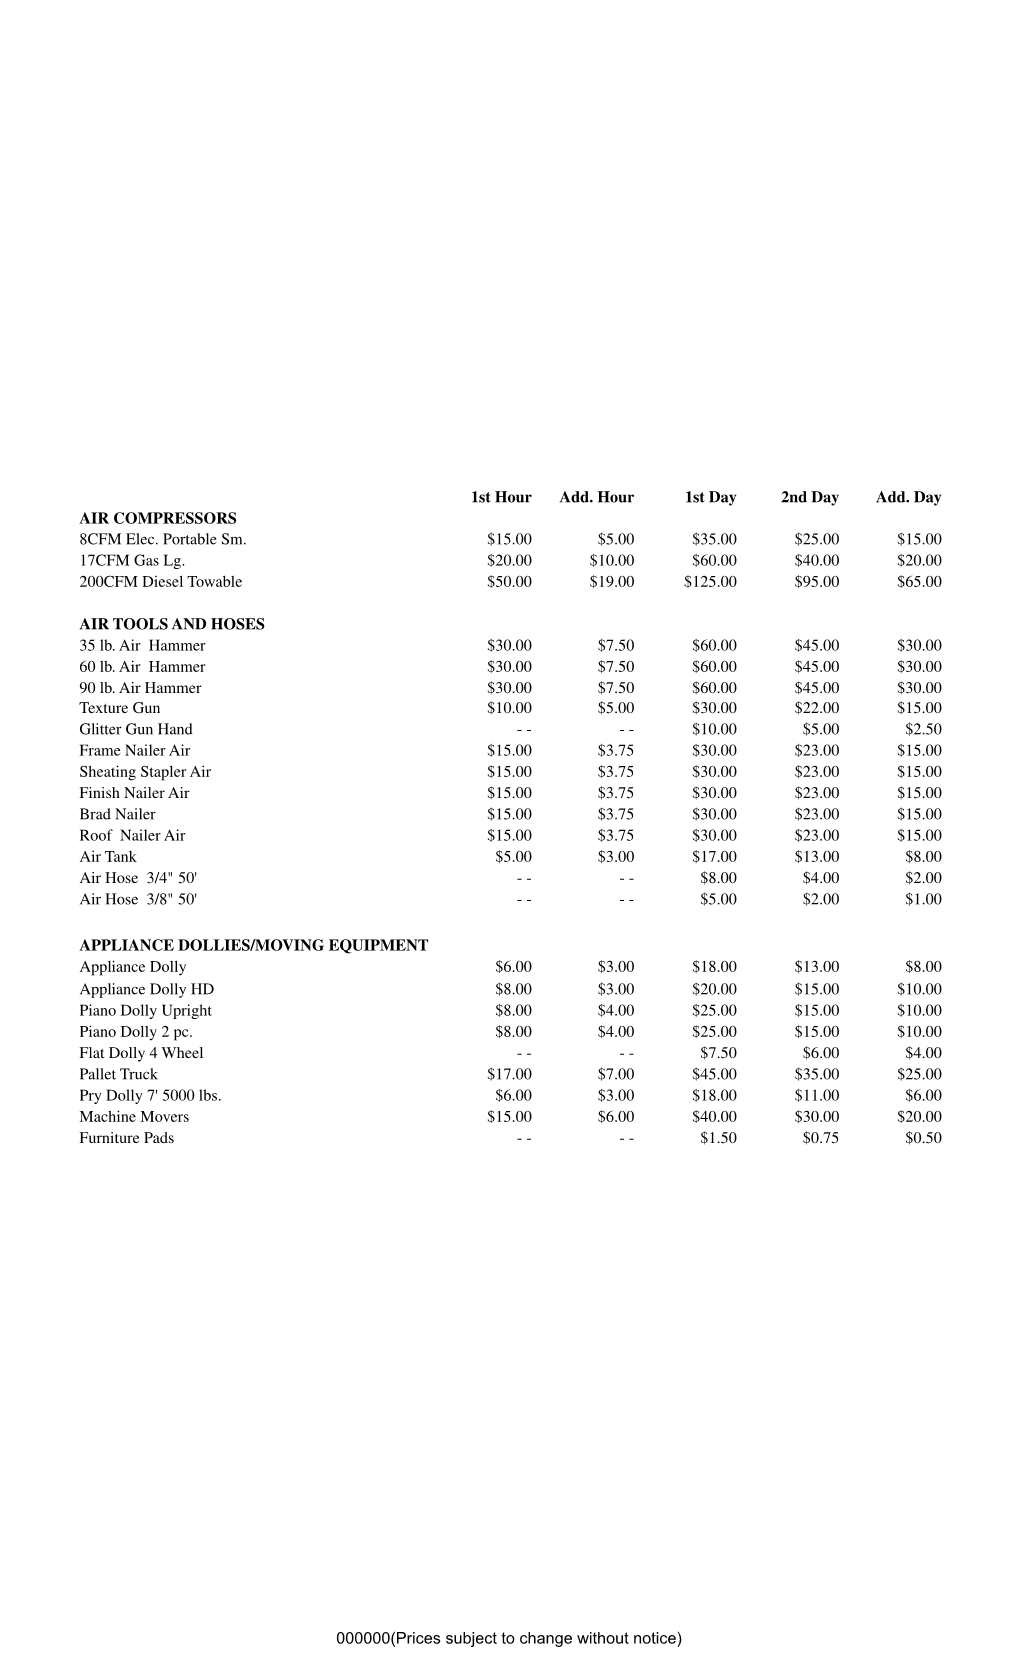 Equipment List & Prices